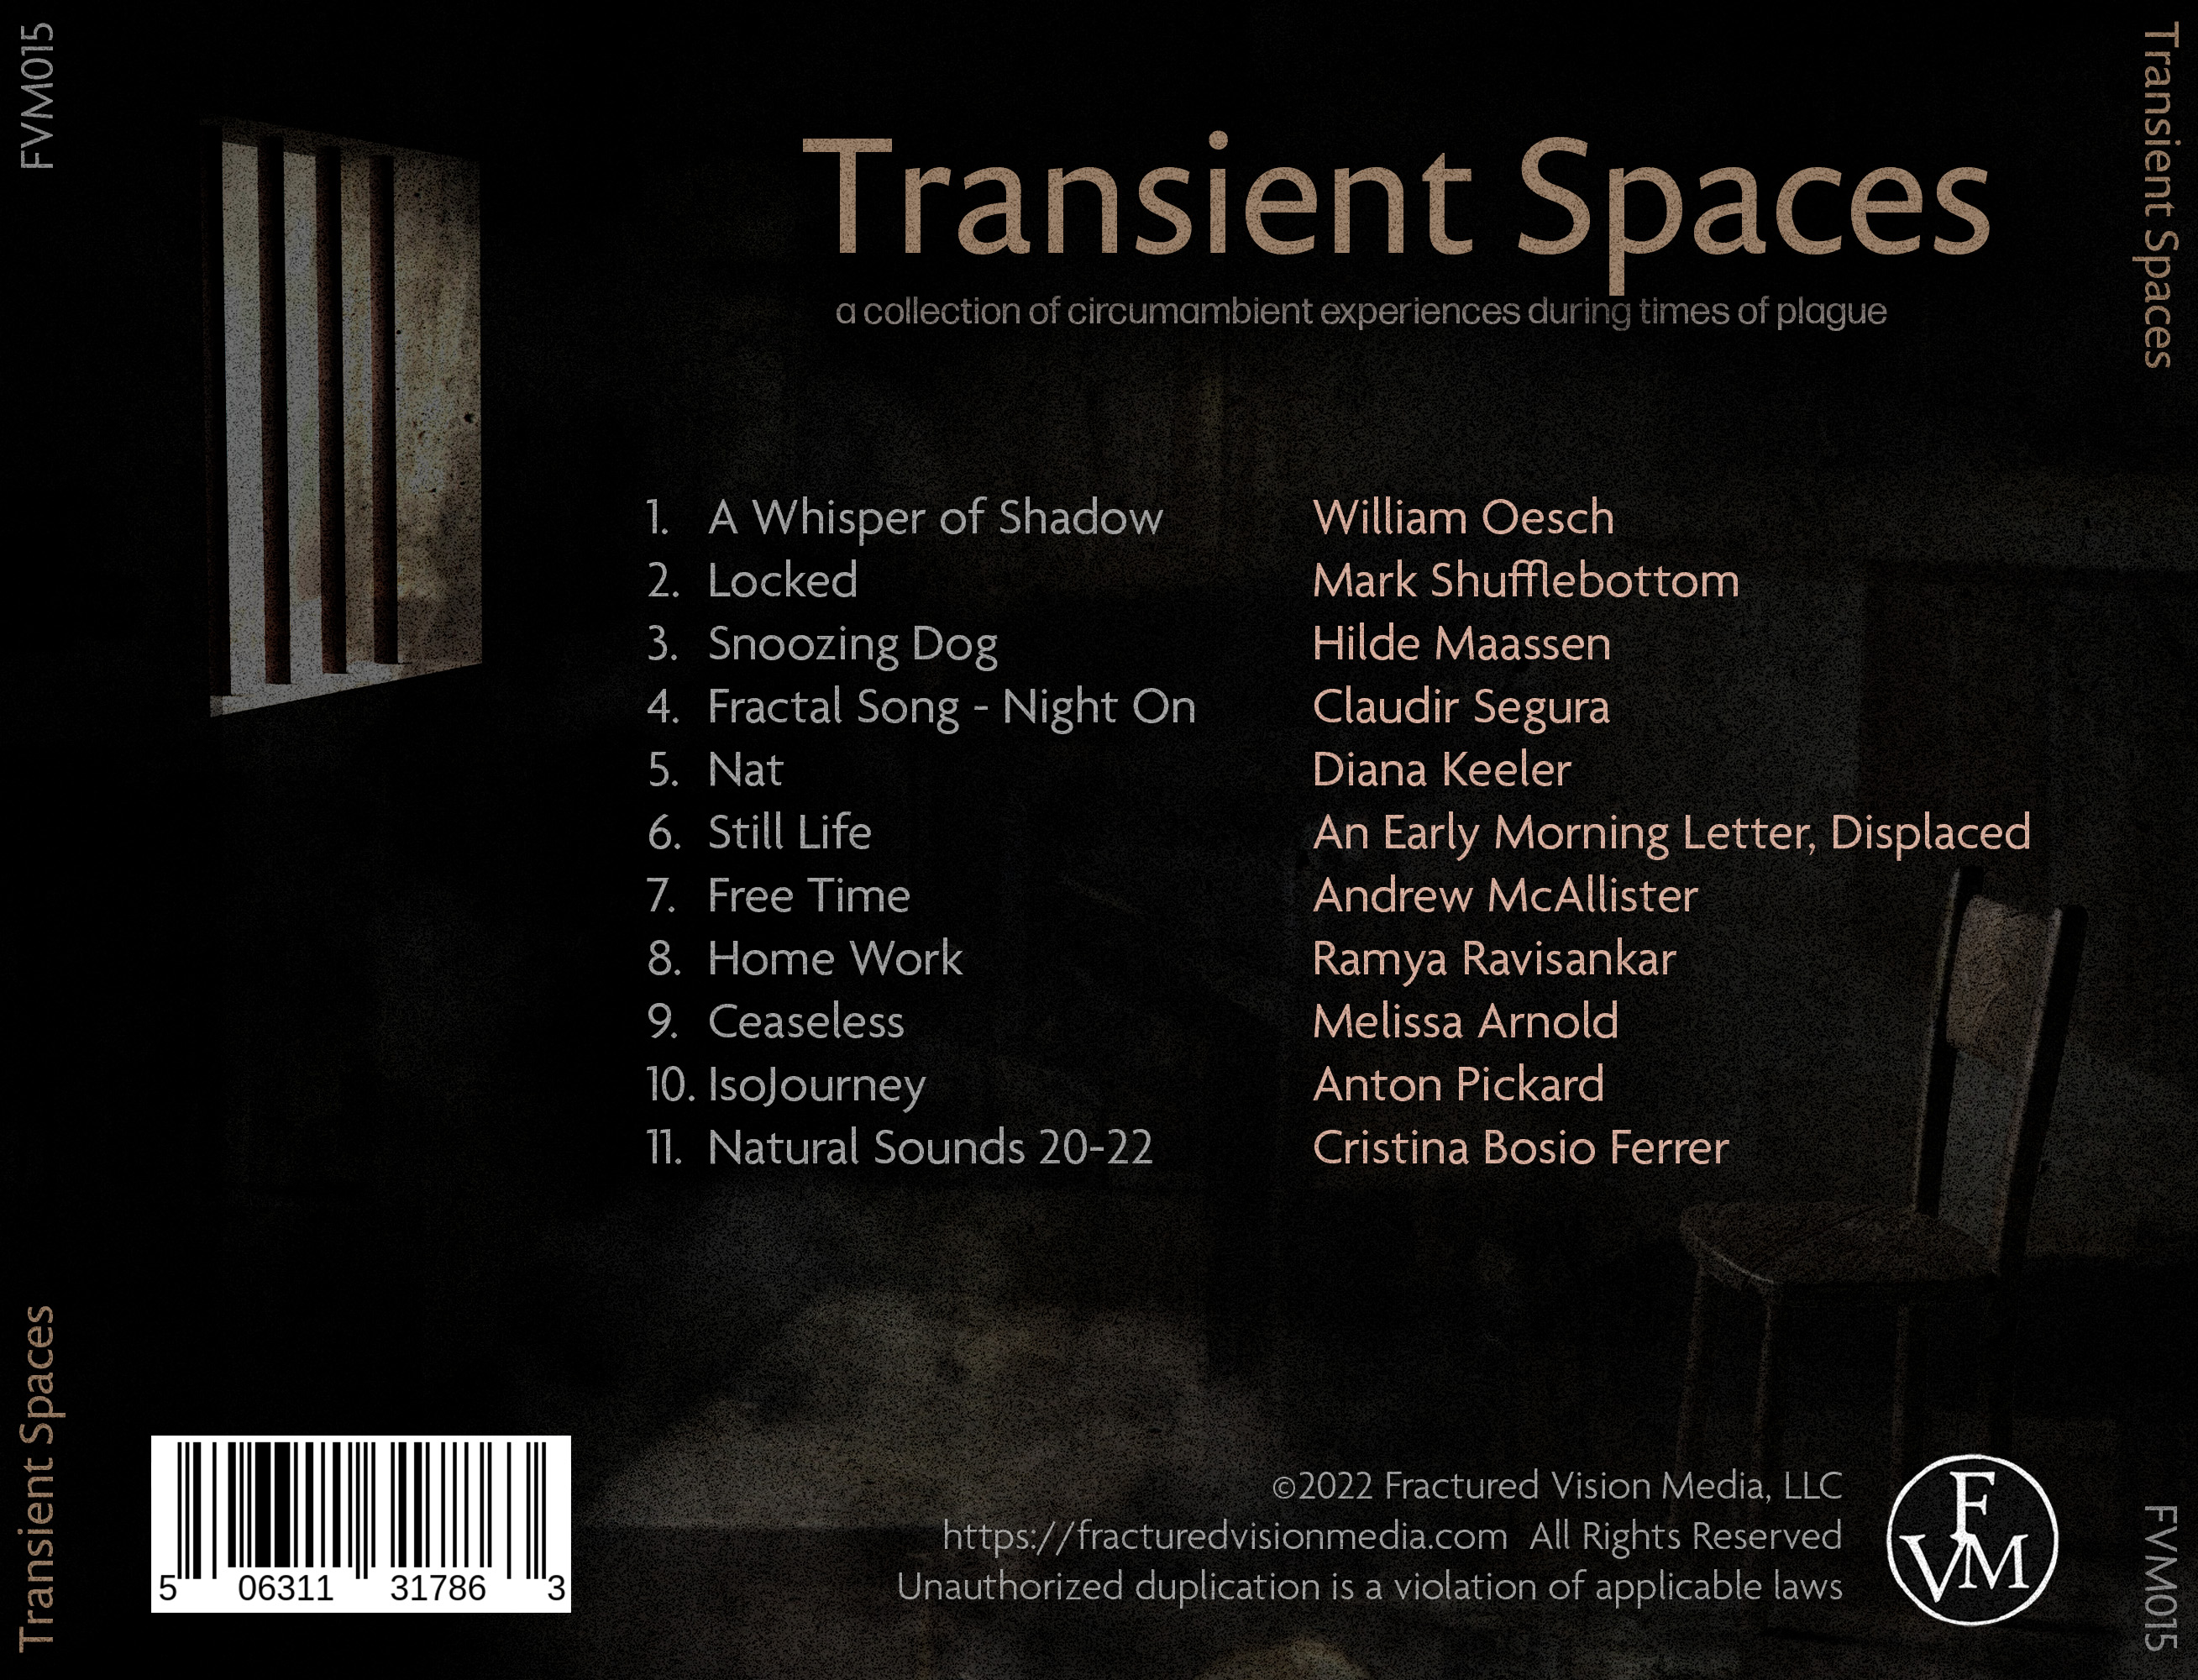 Transient Spaces